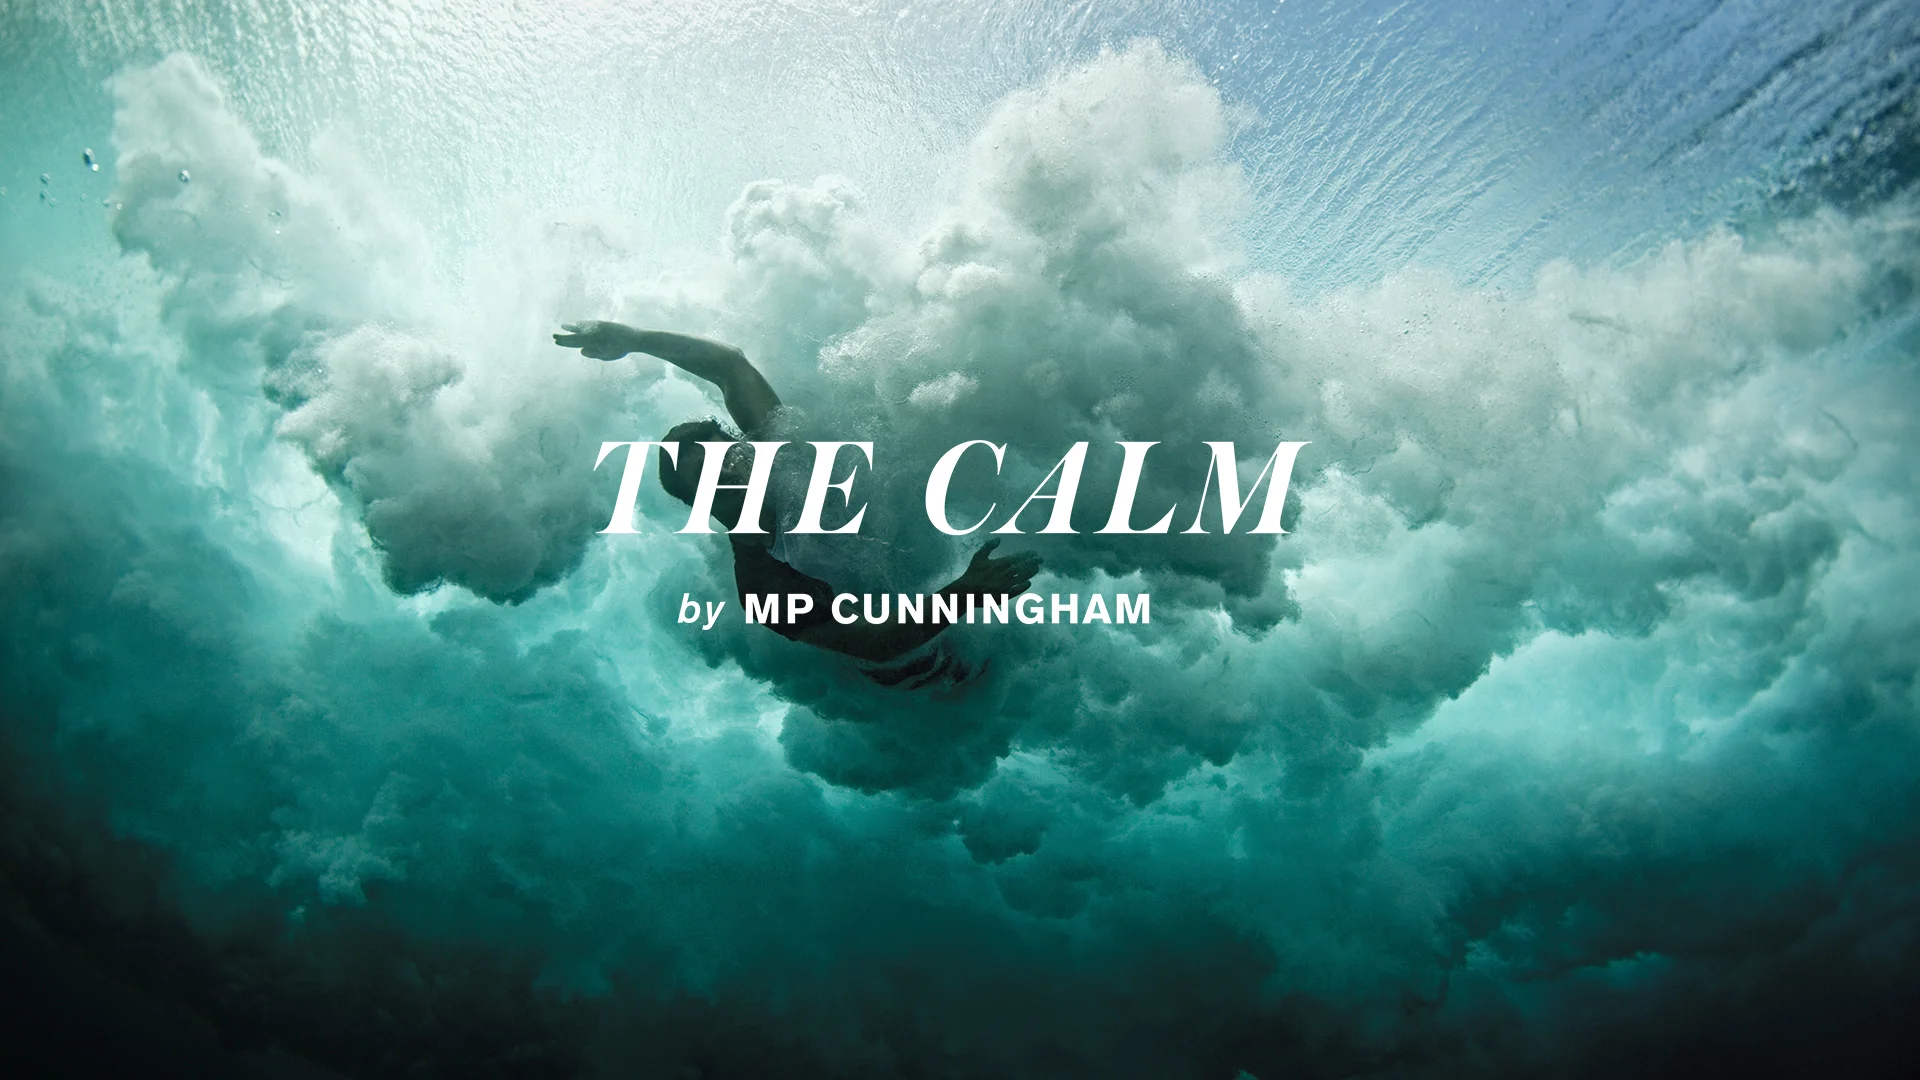 The Calm - Surf Photographer Brian Bielmann on Vimeo